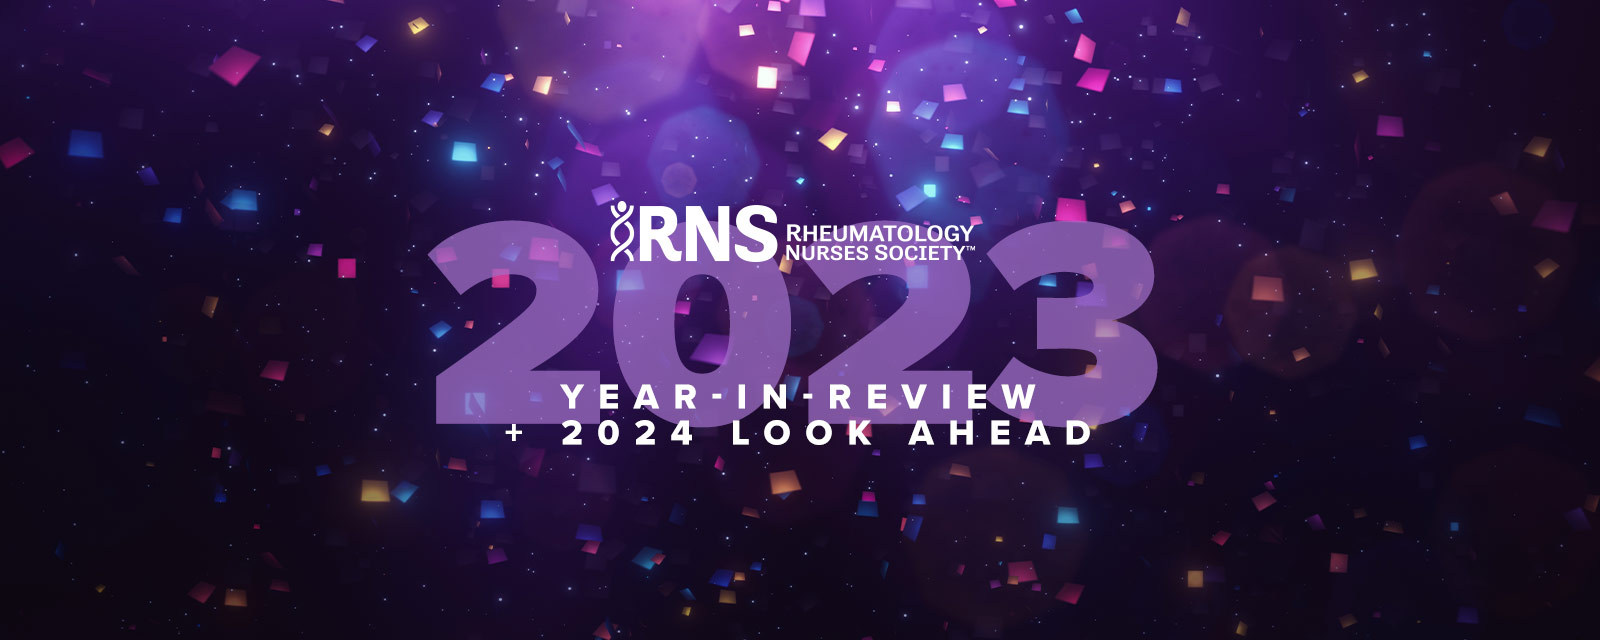 2023 YearinReview + 2024 Look Ahead Rheumatology Nurses Society